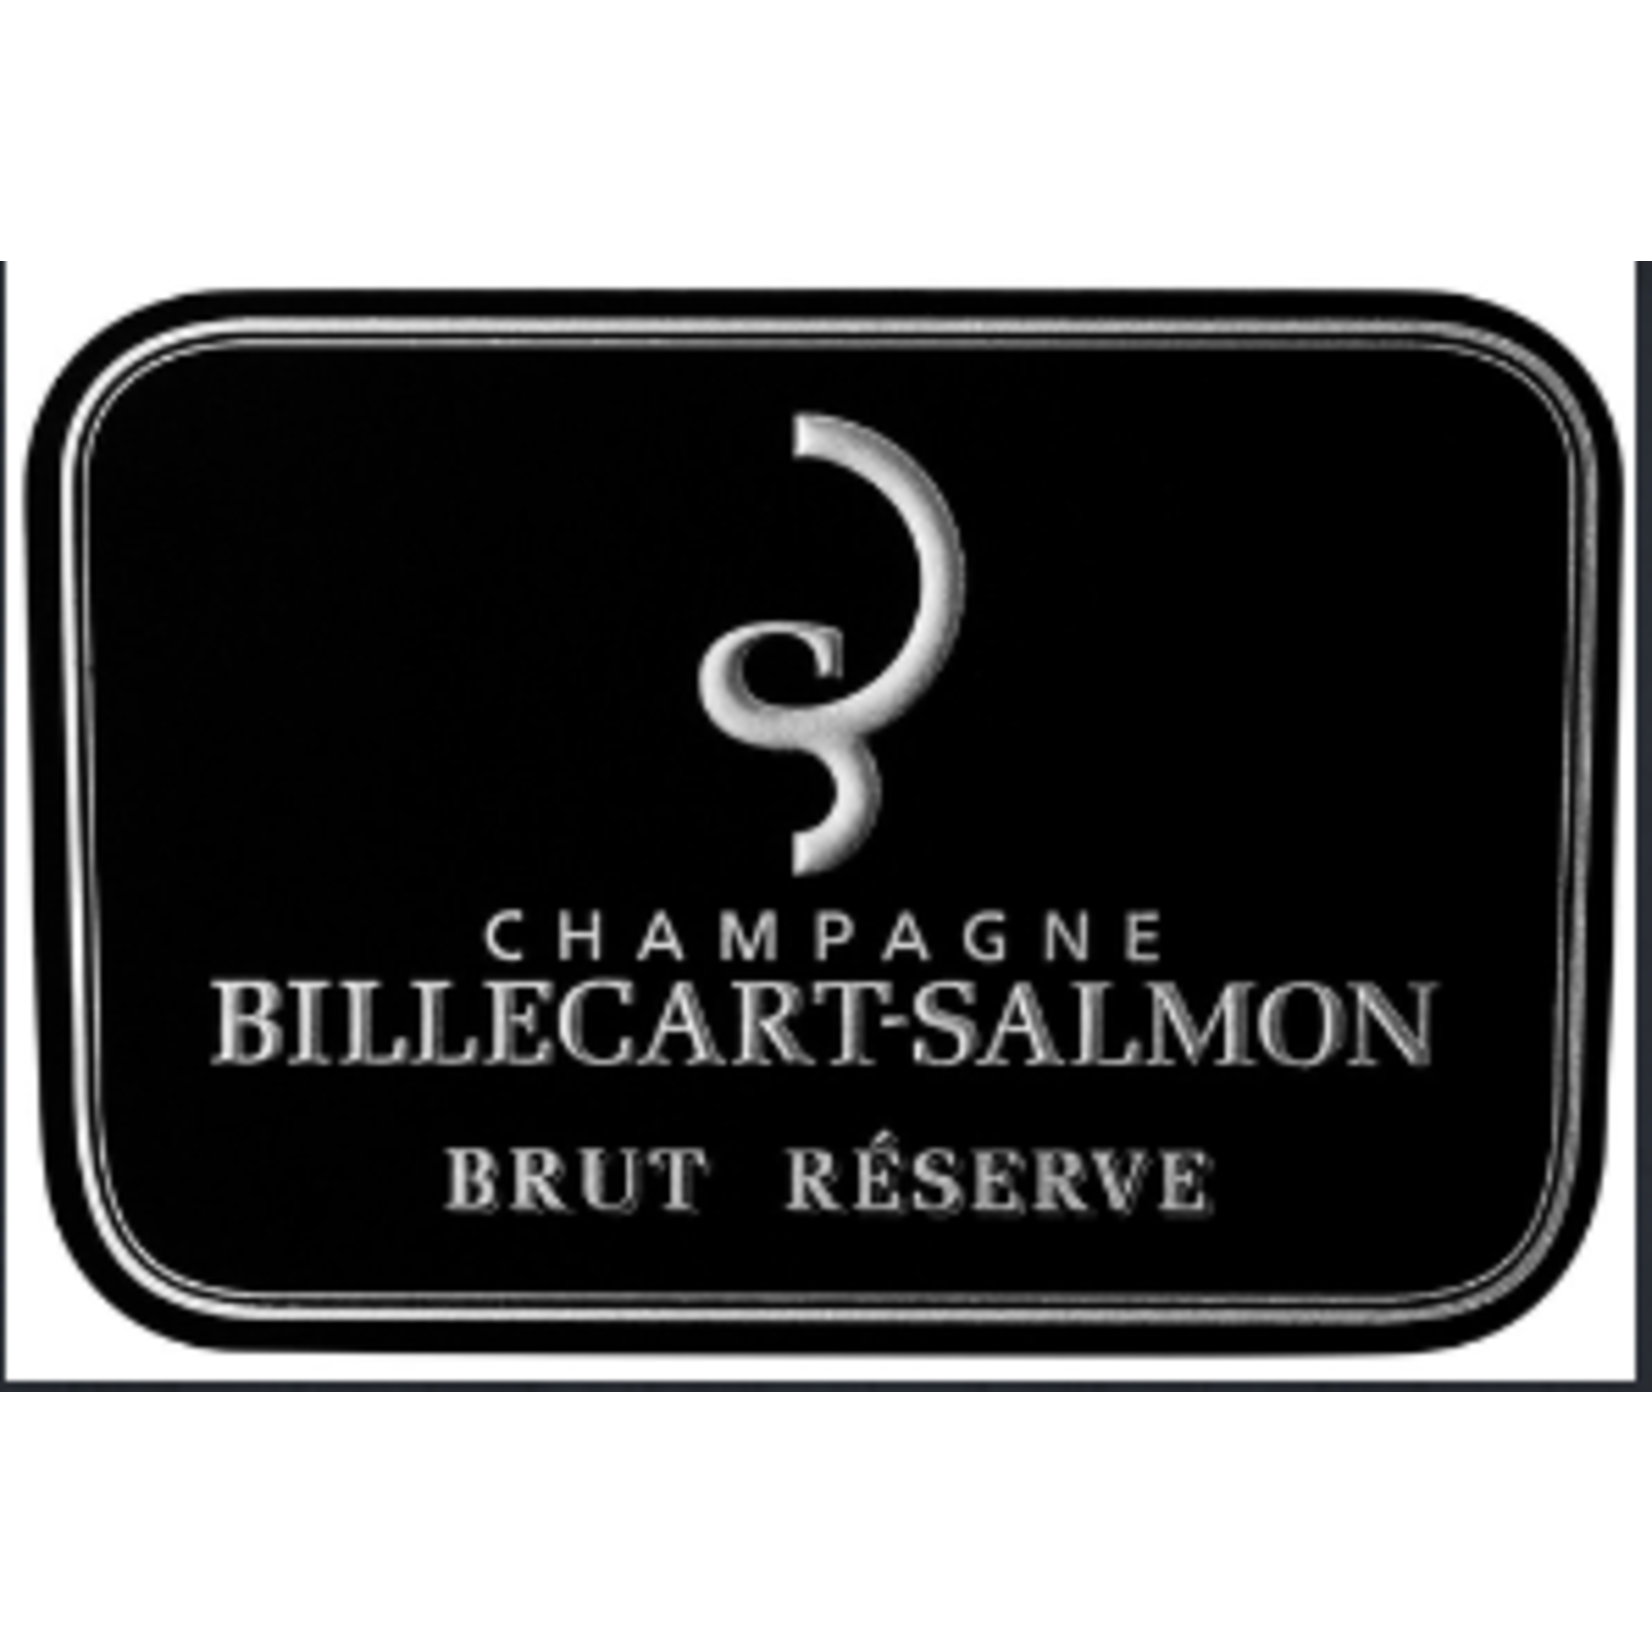 Billecart-Salmon Billecart-Salmon Brut Reserve Champagne Champagne, France 95pts-D, 91pts-WE, 90pts-WS